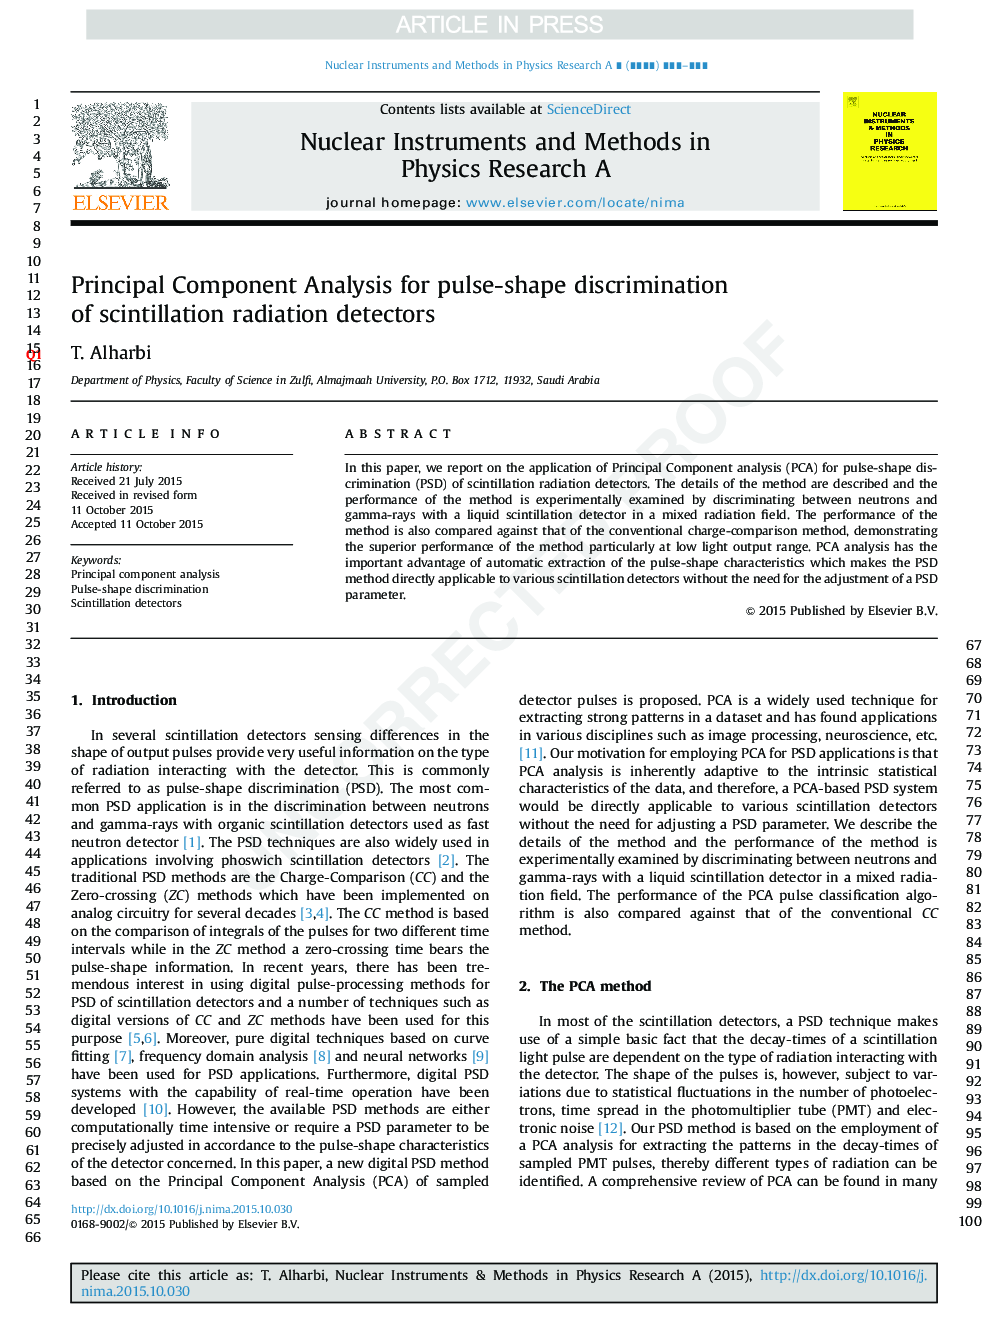 Principal Component Analysis for pulse-shape discrimination of scintillation radiation detectors